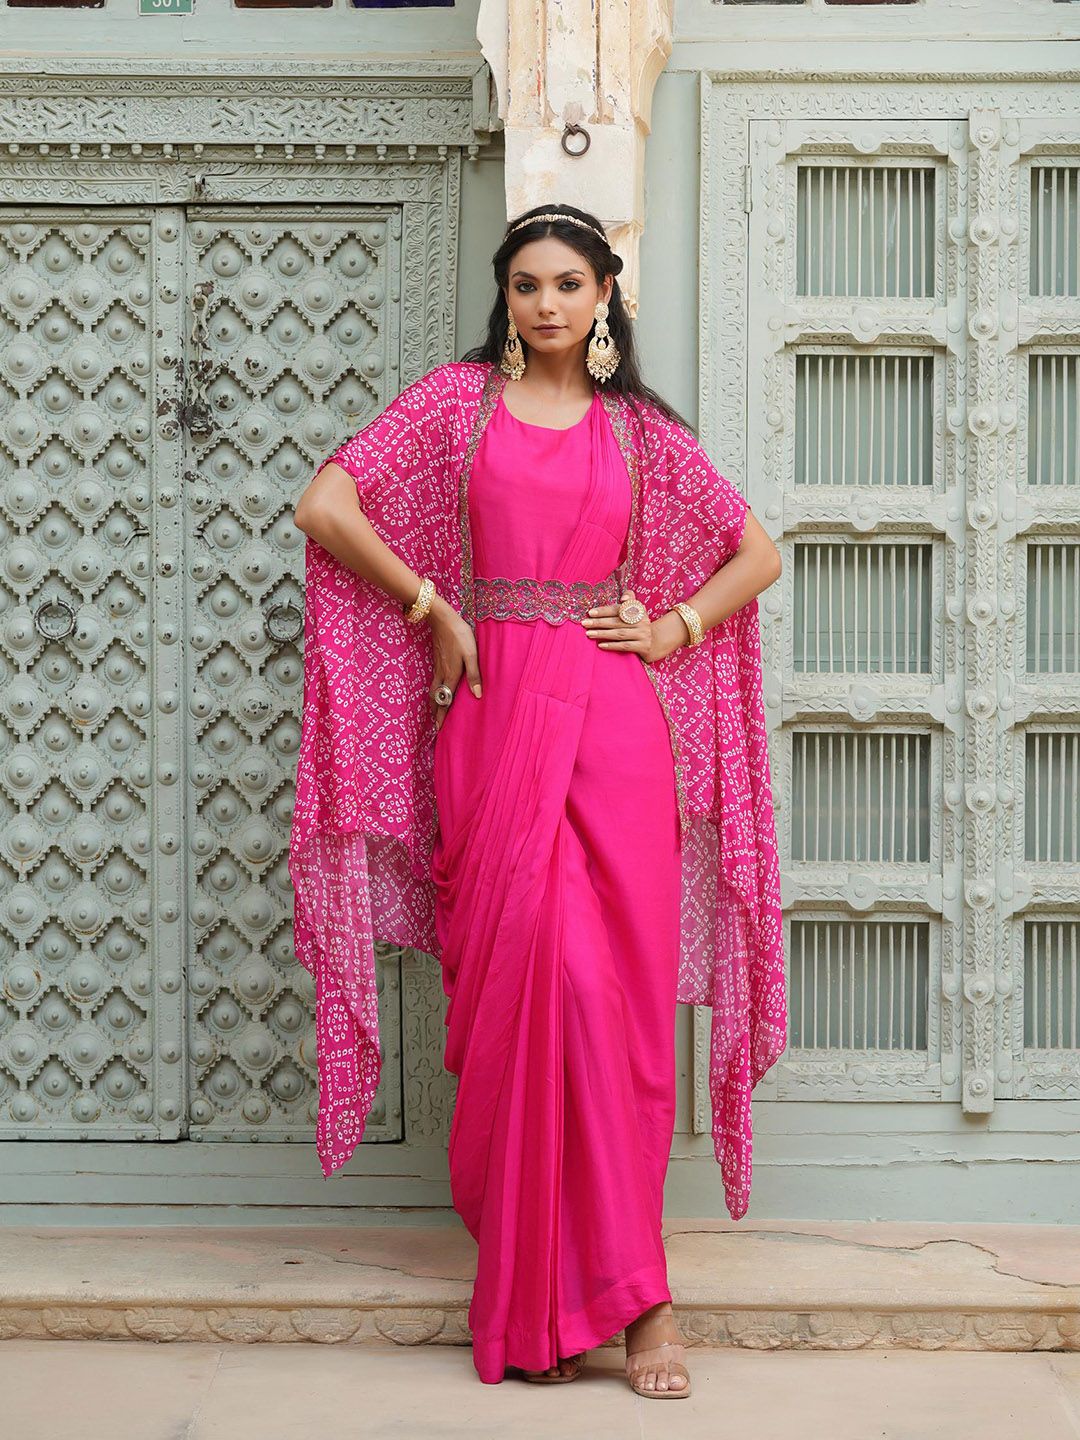 SCAKHI Pink And White Leheriya Beads And Stones Embellished Ready to Wear Leheriya Saree Price in India